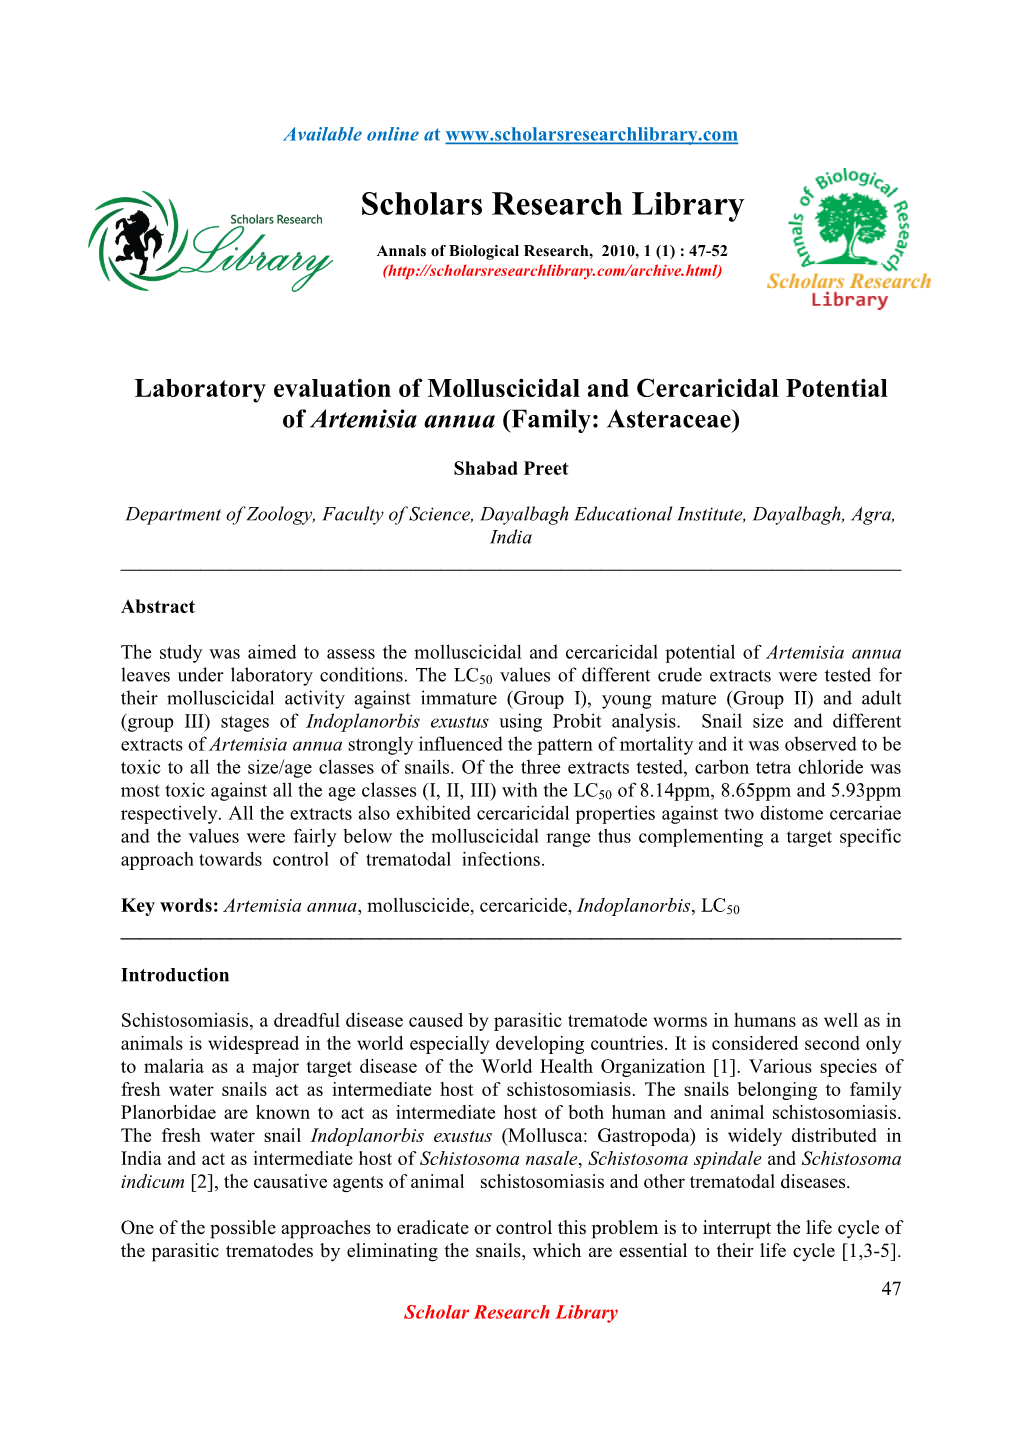 Laboratory Evaluation of Molluscicidal and Cercaricidal Potential of Artemisia Annua (Family: Asteraceae)